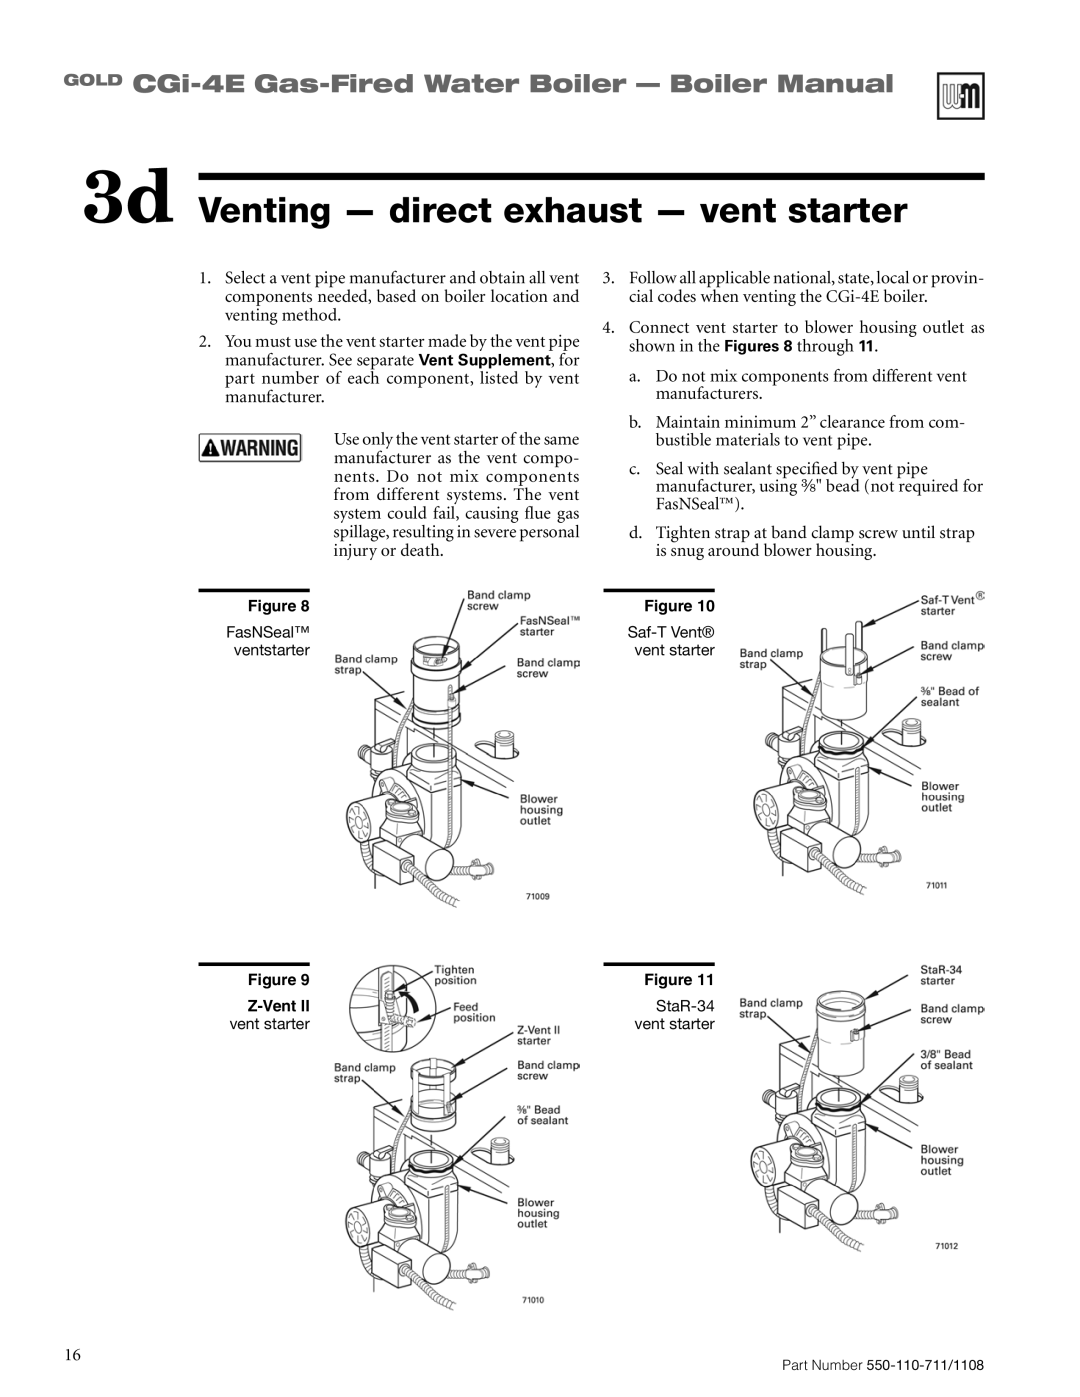 Weil-McLain CGI-4E manual 3d Venting - direct exhaust - vent starter, GOLD CGi-4E Gas-FiredWater Boiler - Boiler Manual 